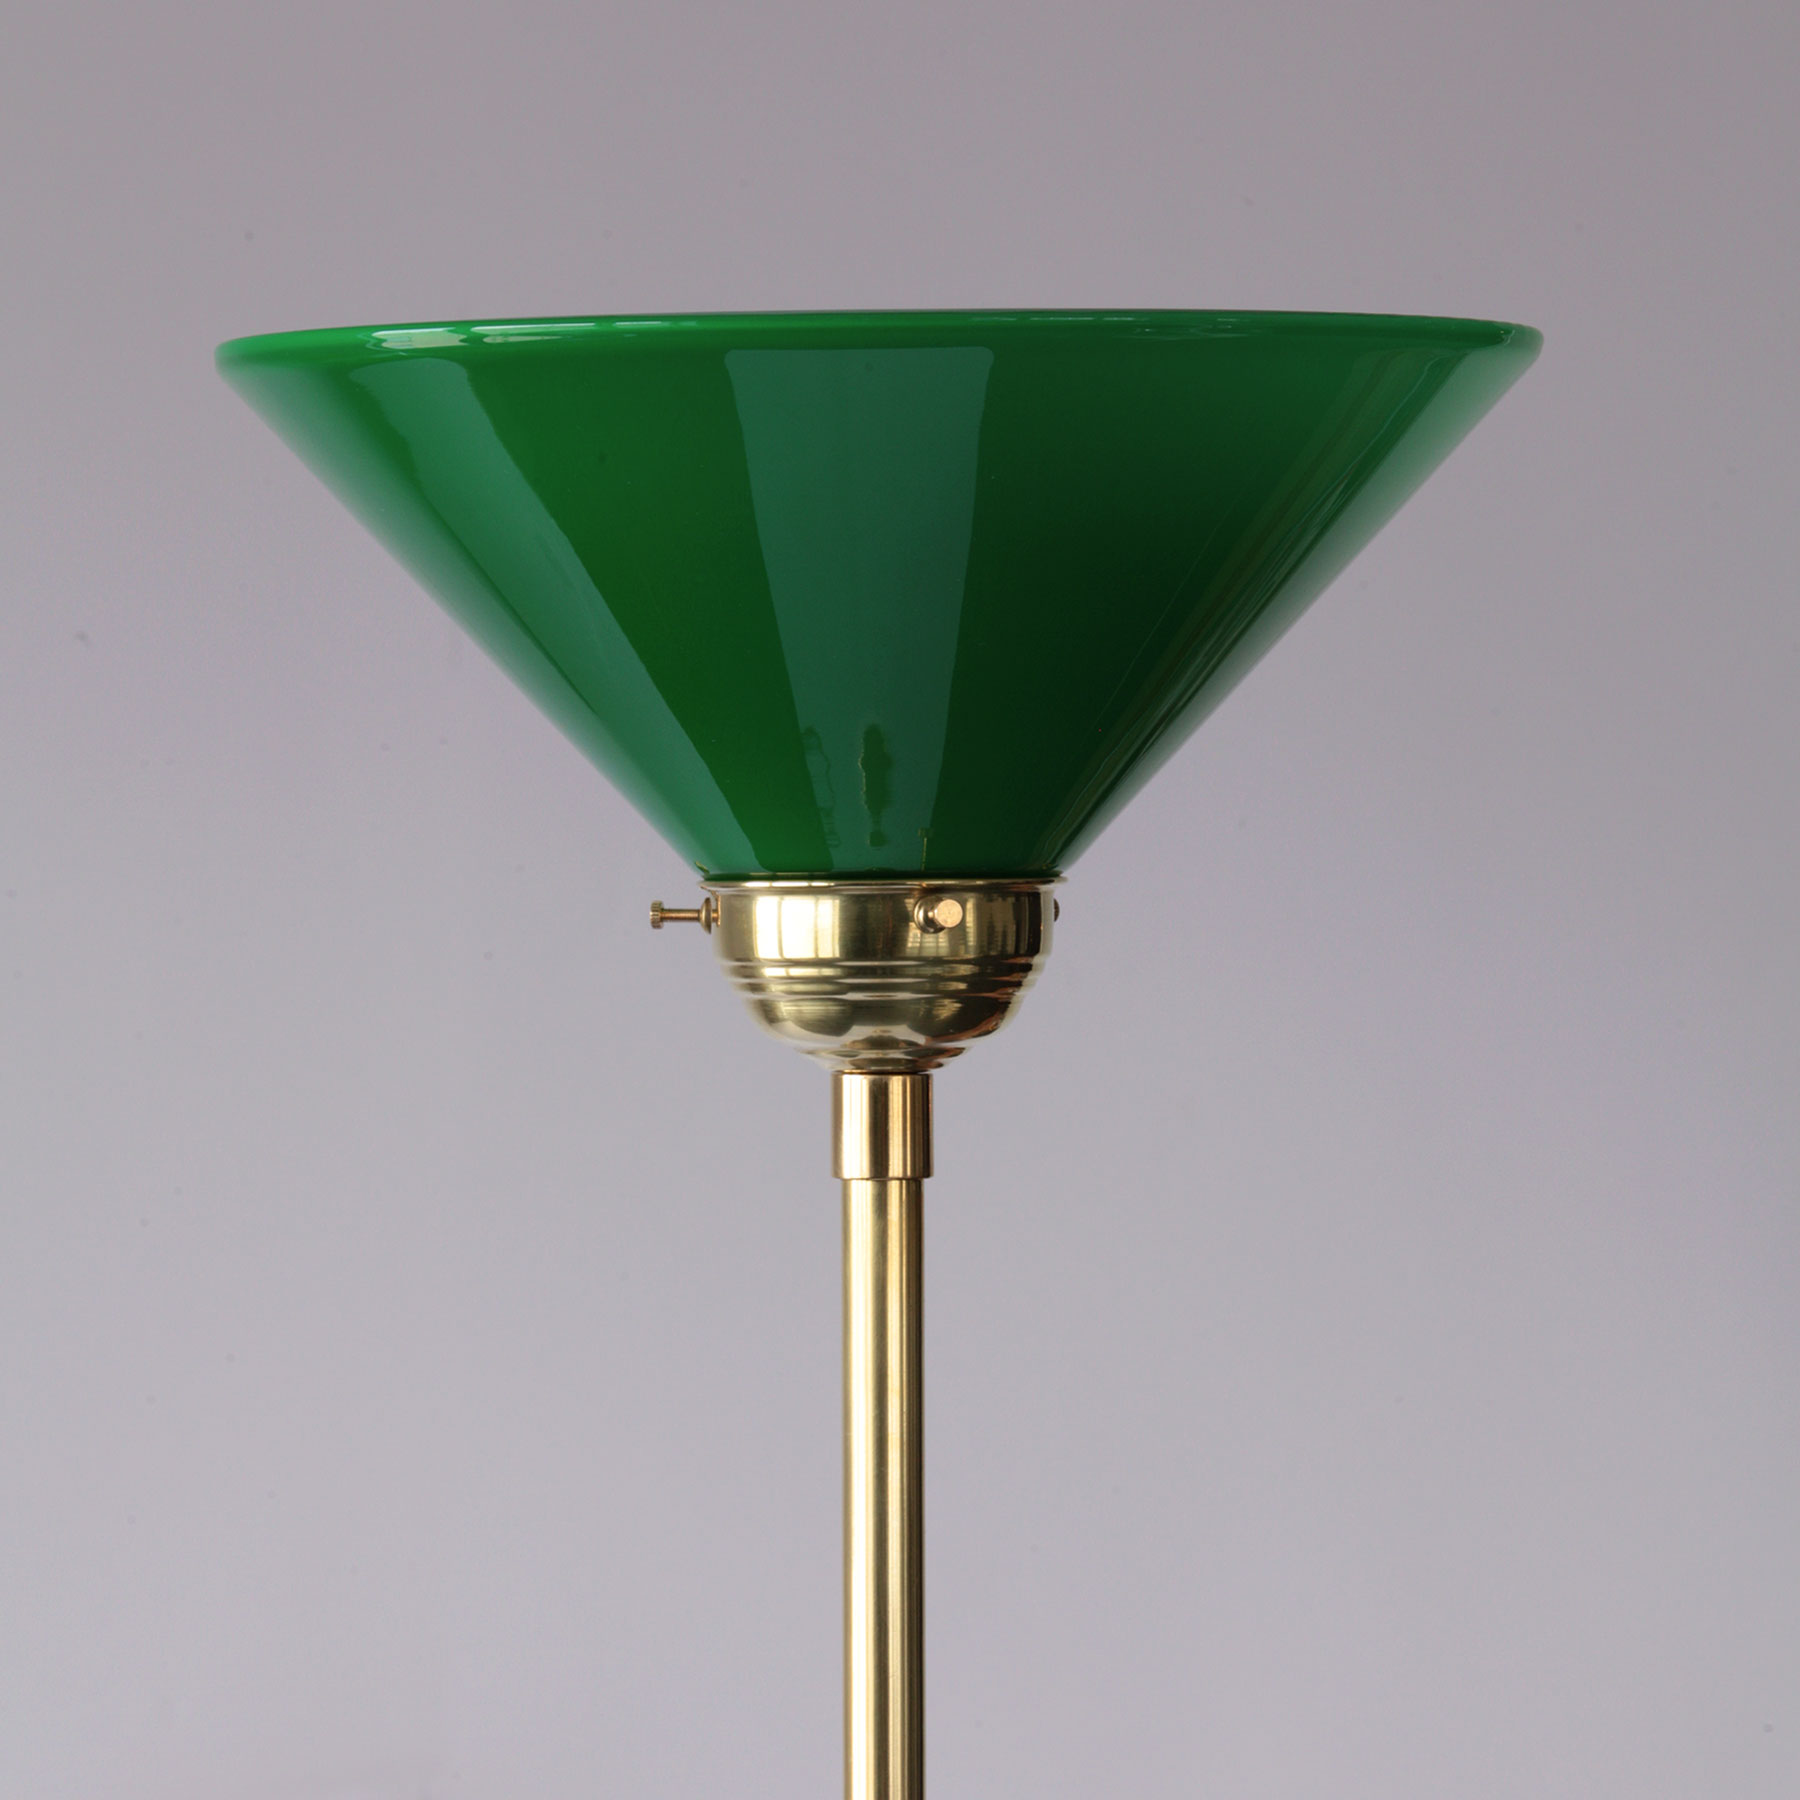 Jugendstil-Deckenfluter mit Kegel-Glasschirm: Messing poliert, unlackiert, mit grünem Kegel-Glasschirm